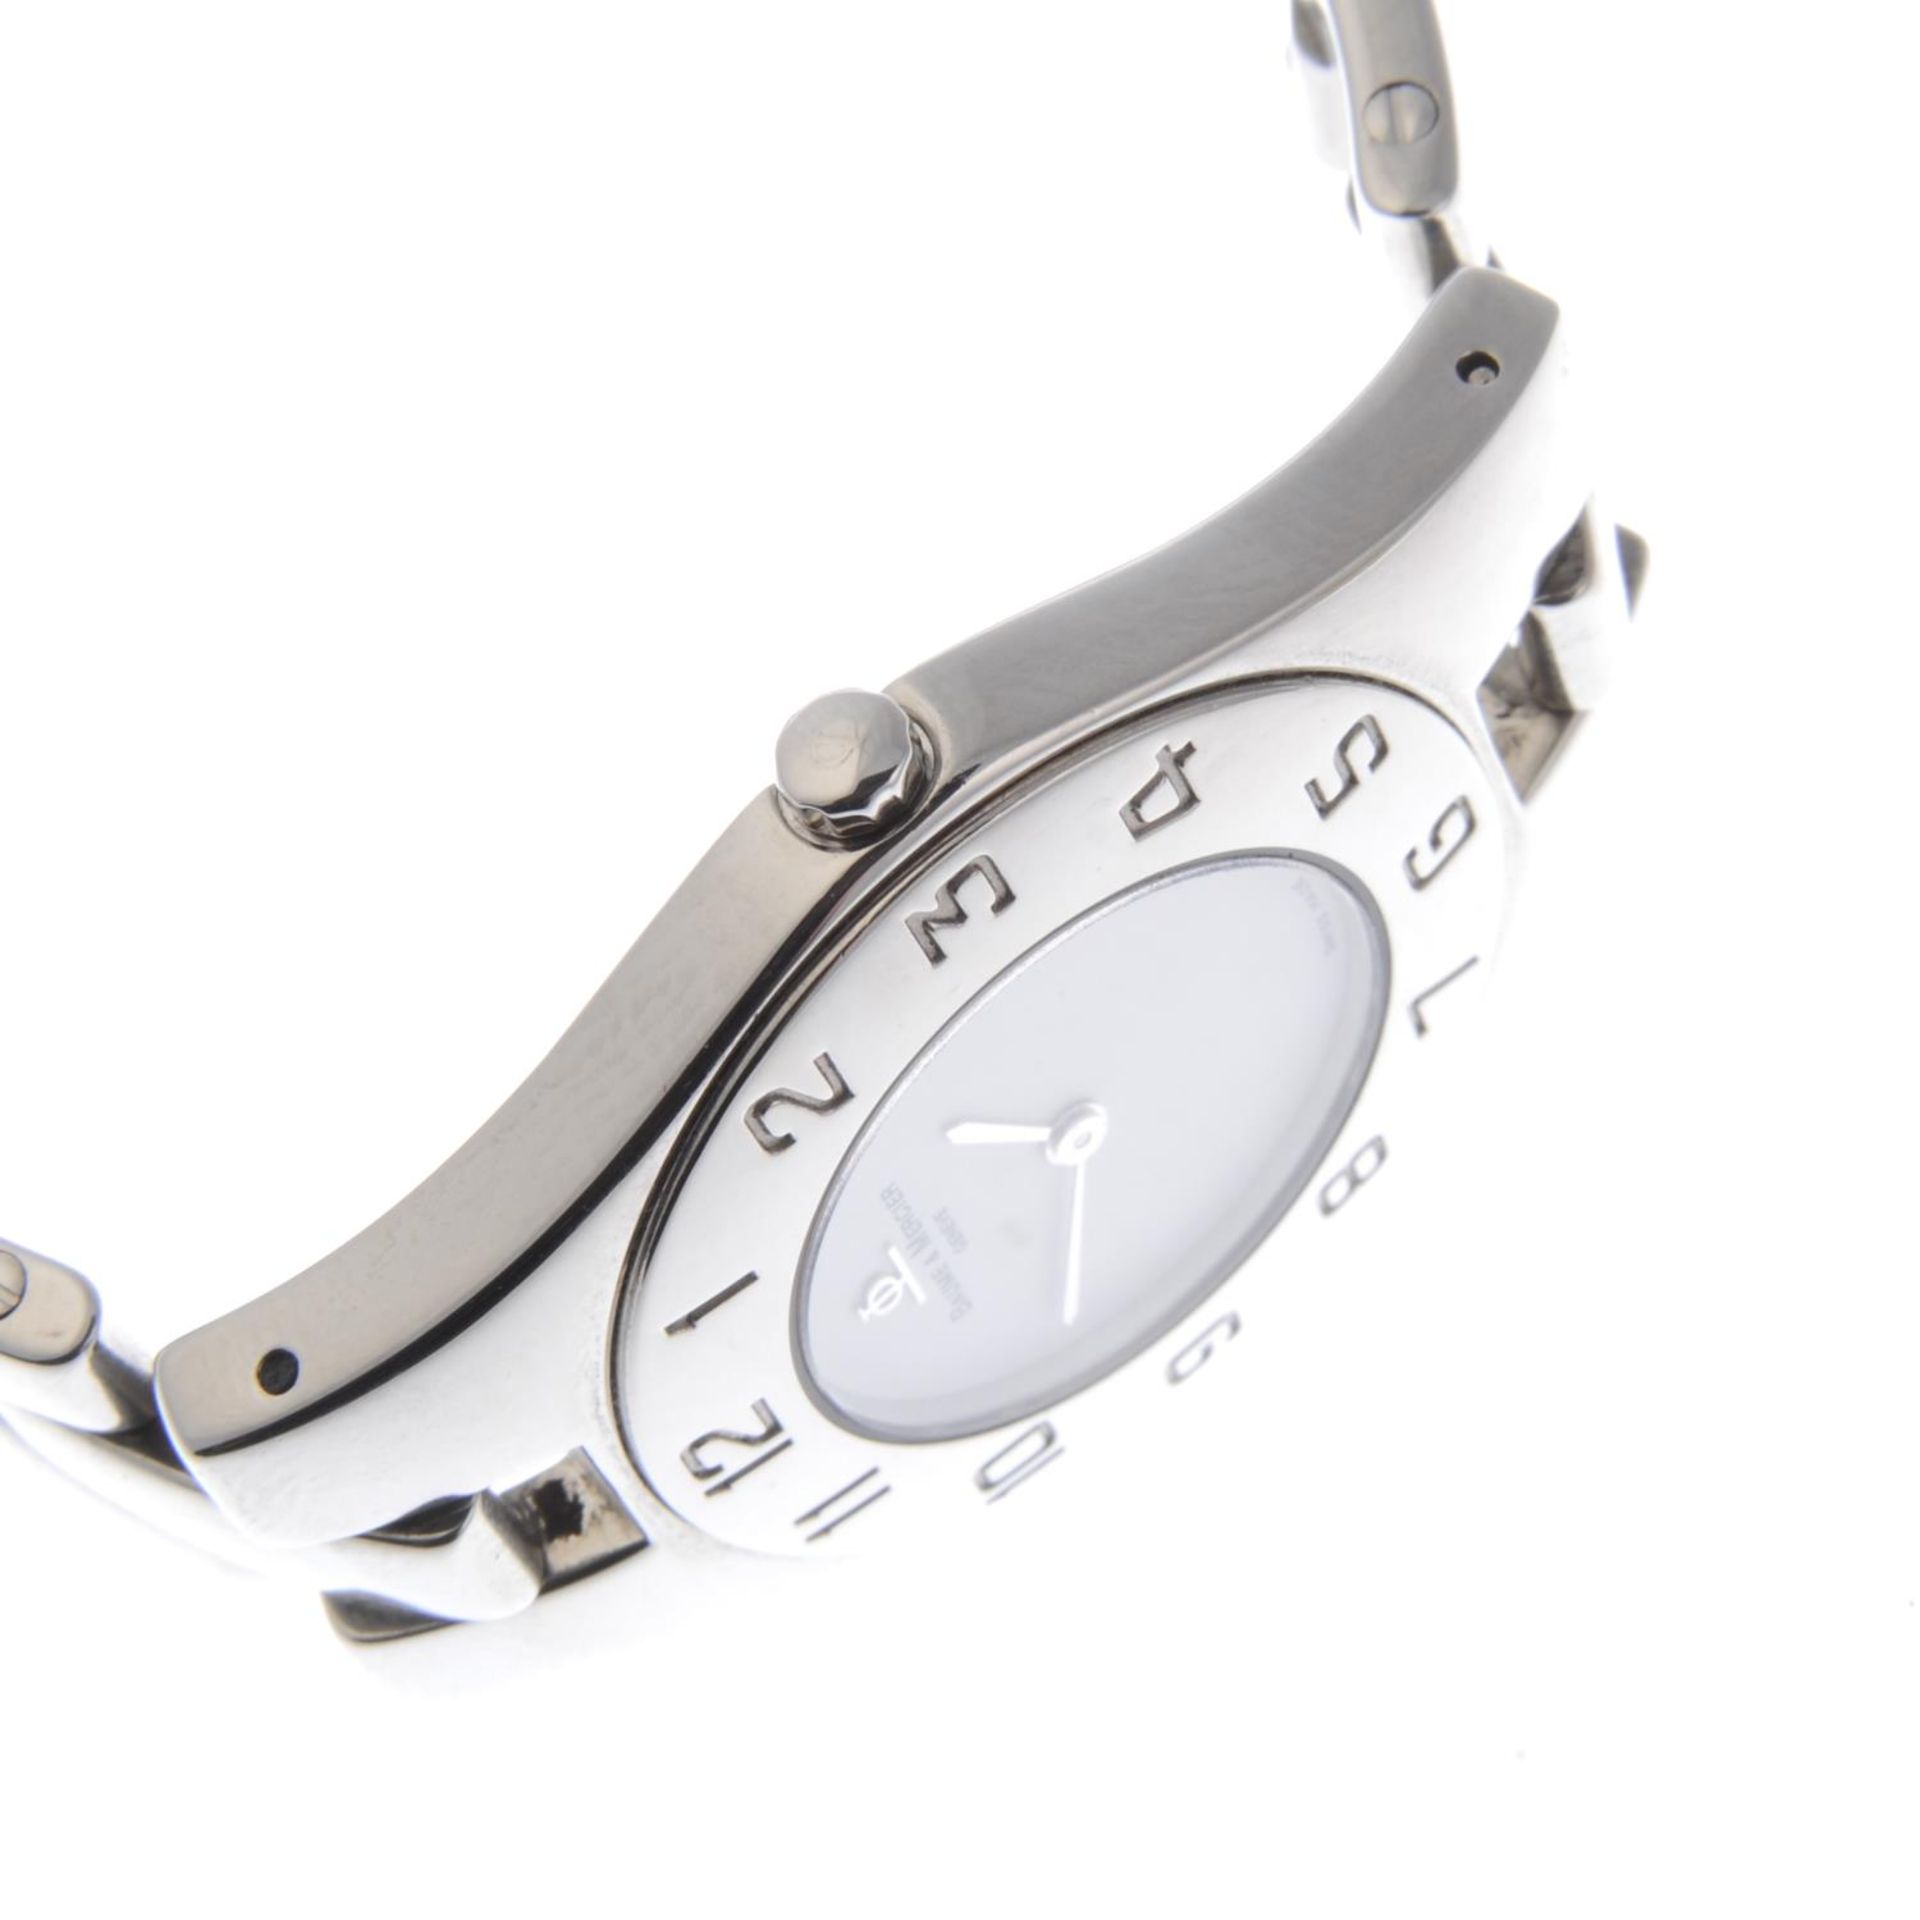 BAUME & MERCIER - a lady's Linea bracelet watch. - Image 3 of 4